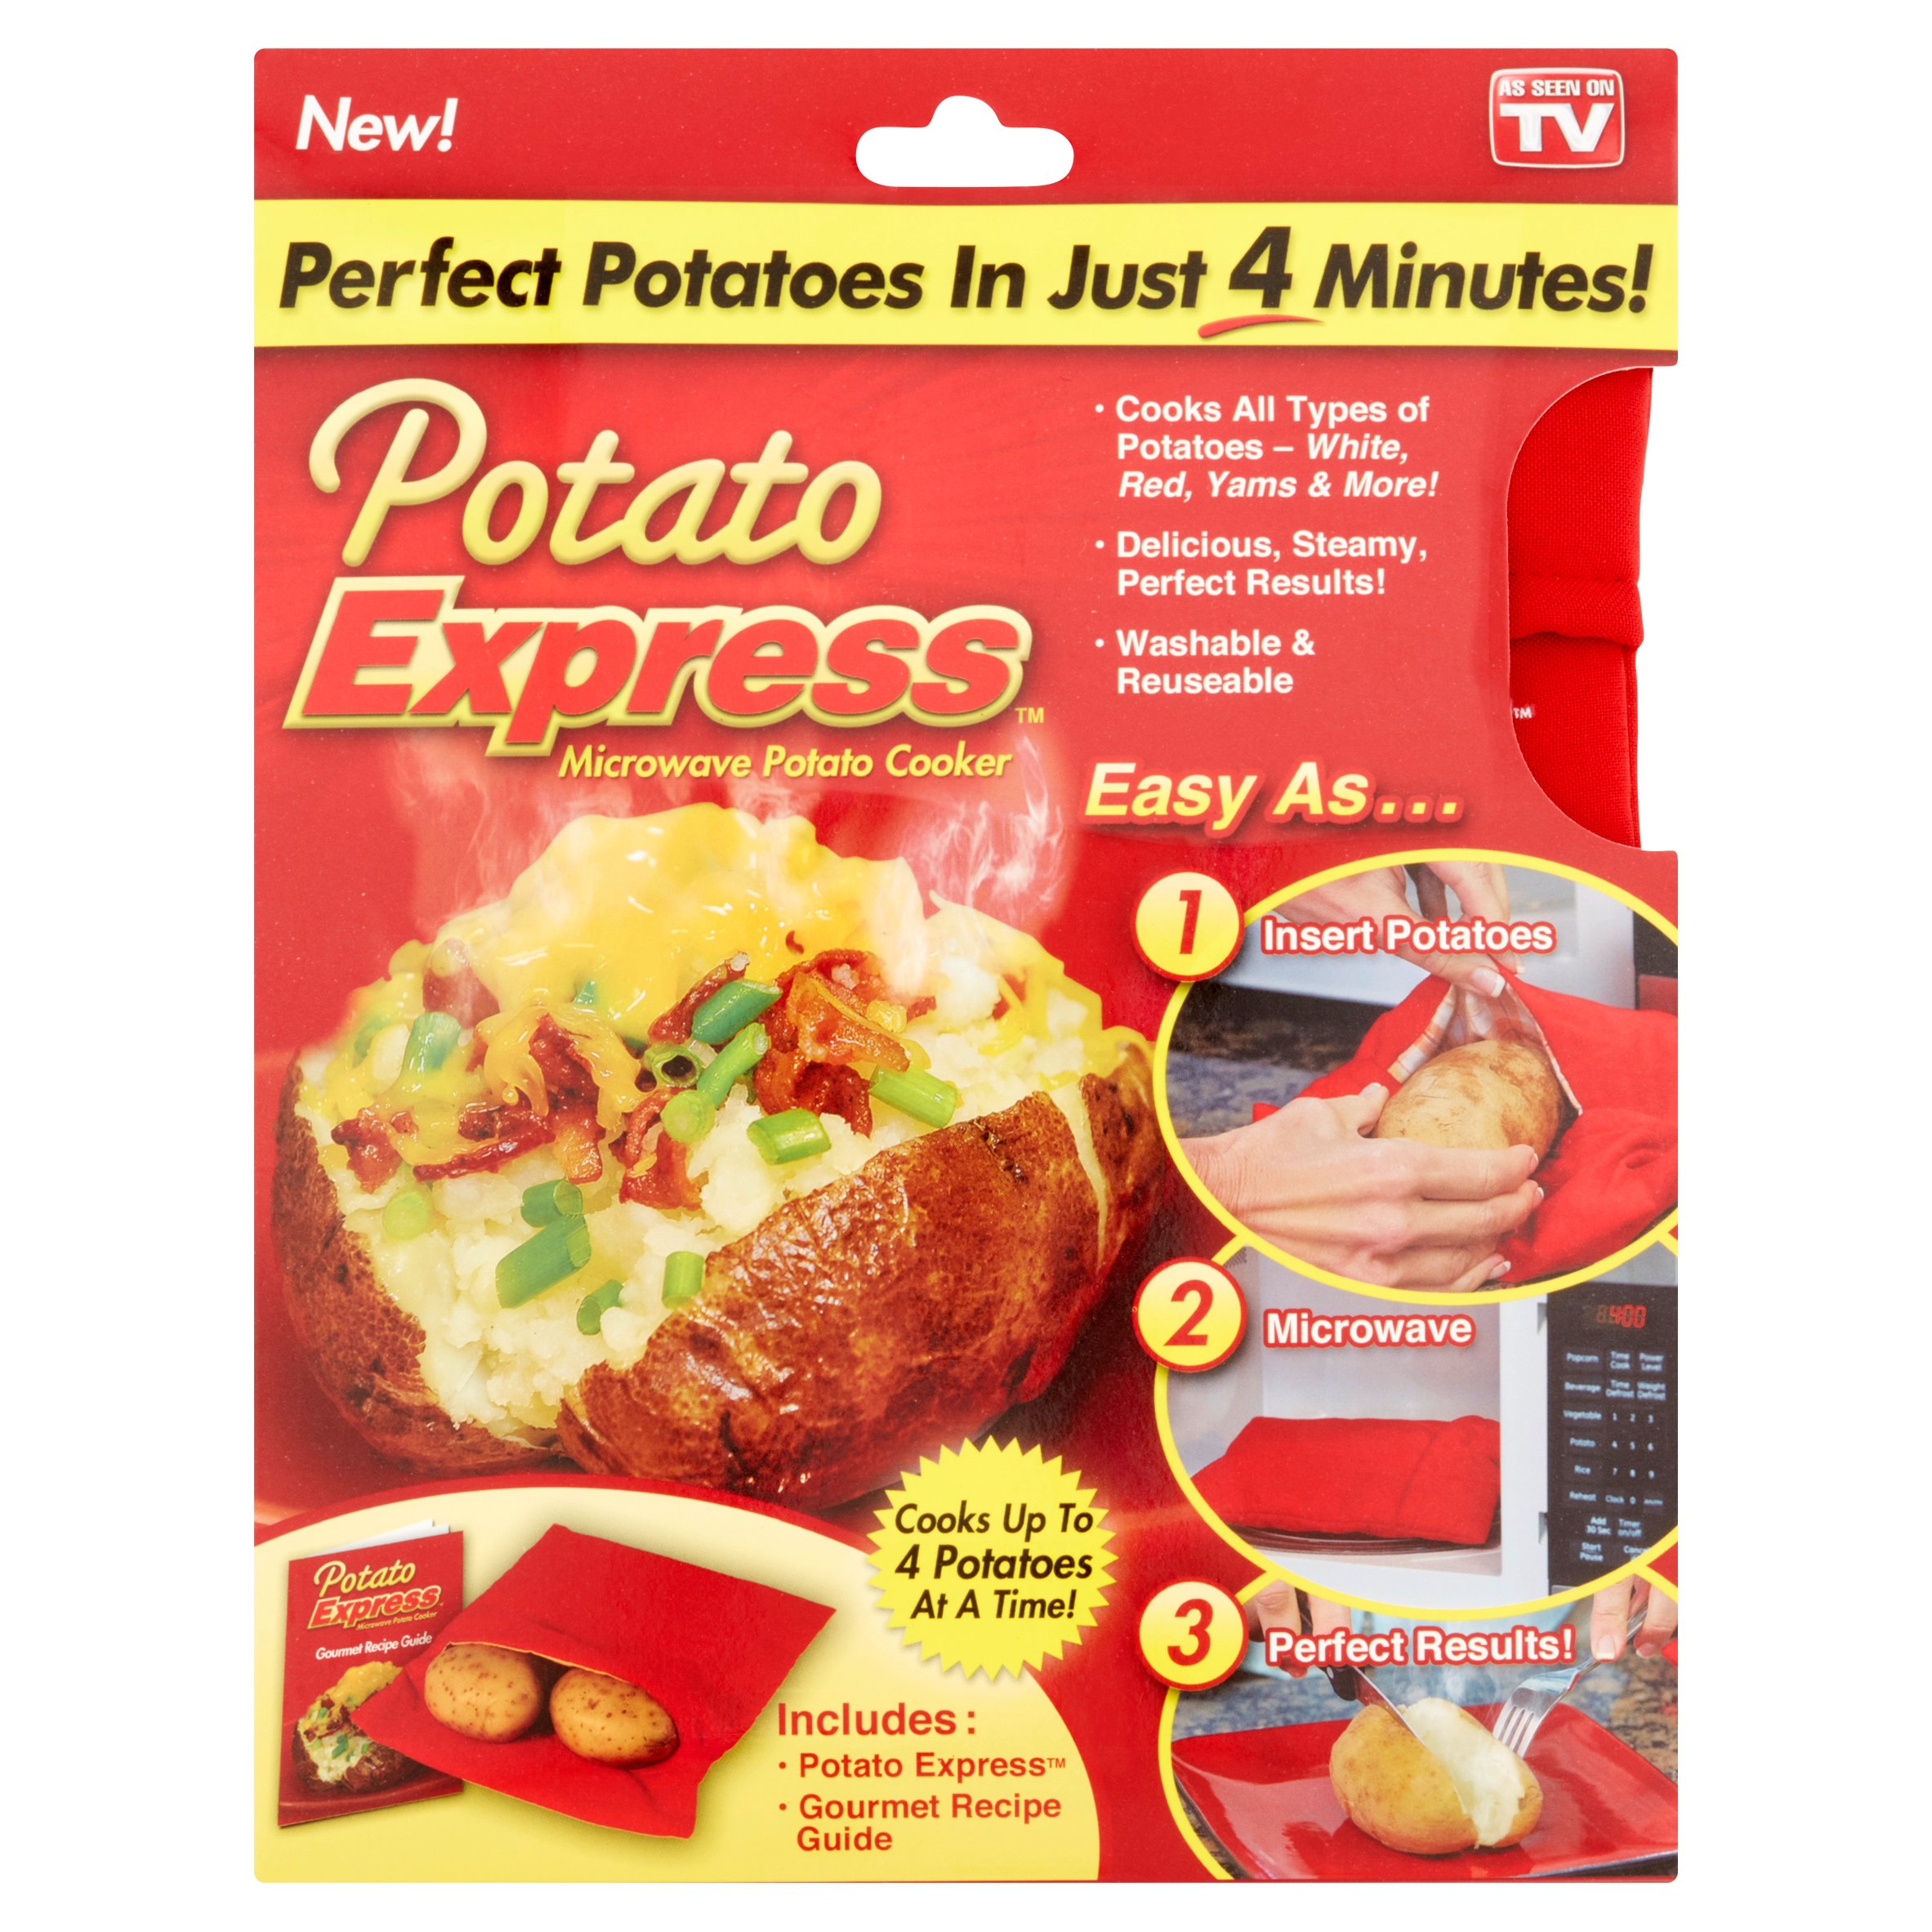 As Seen on TV Potato Express, Microwave Potato Cooker - image 1 of 4